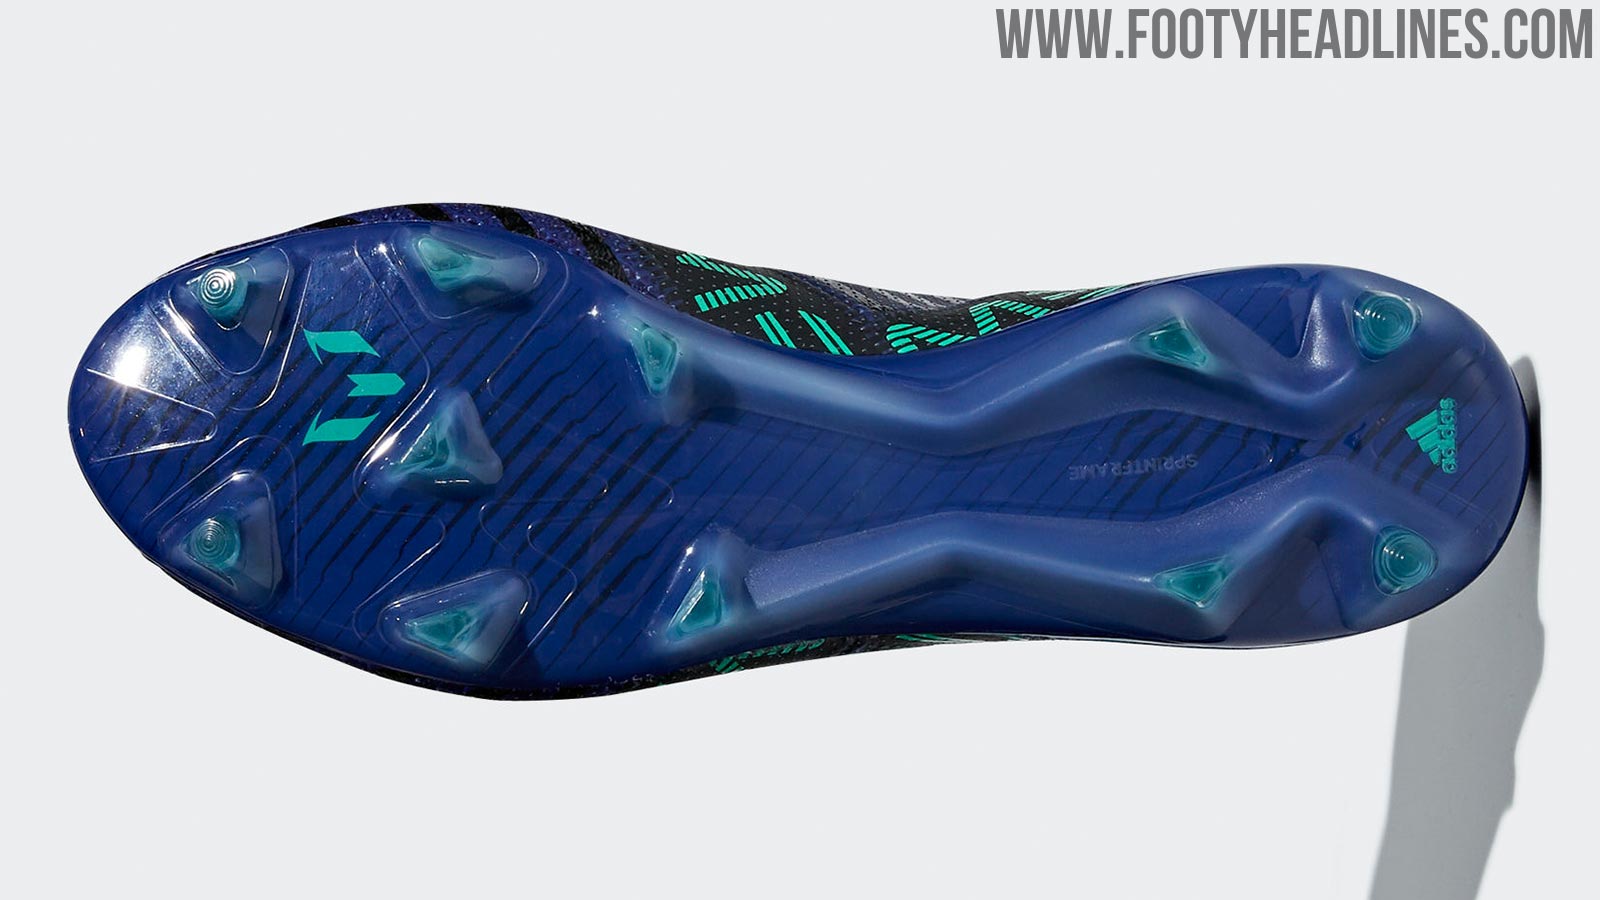 'Deadly Strike' Adidas Nemeziz Messi 17 Boots Released - Footy Headlines